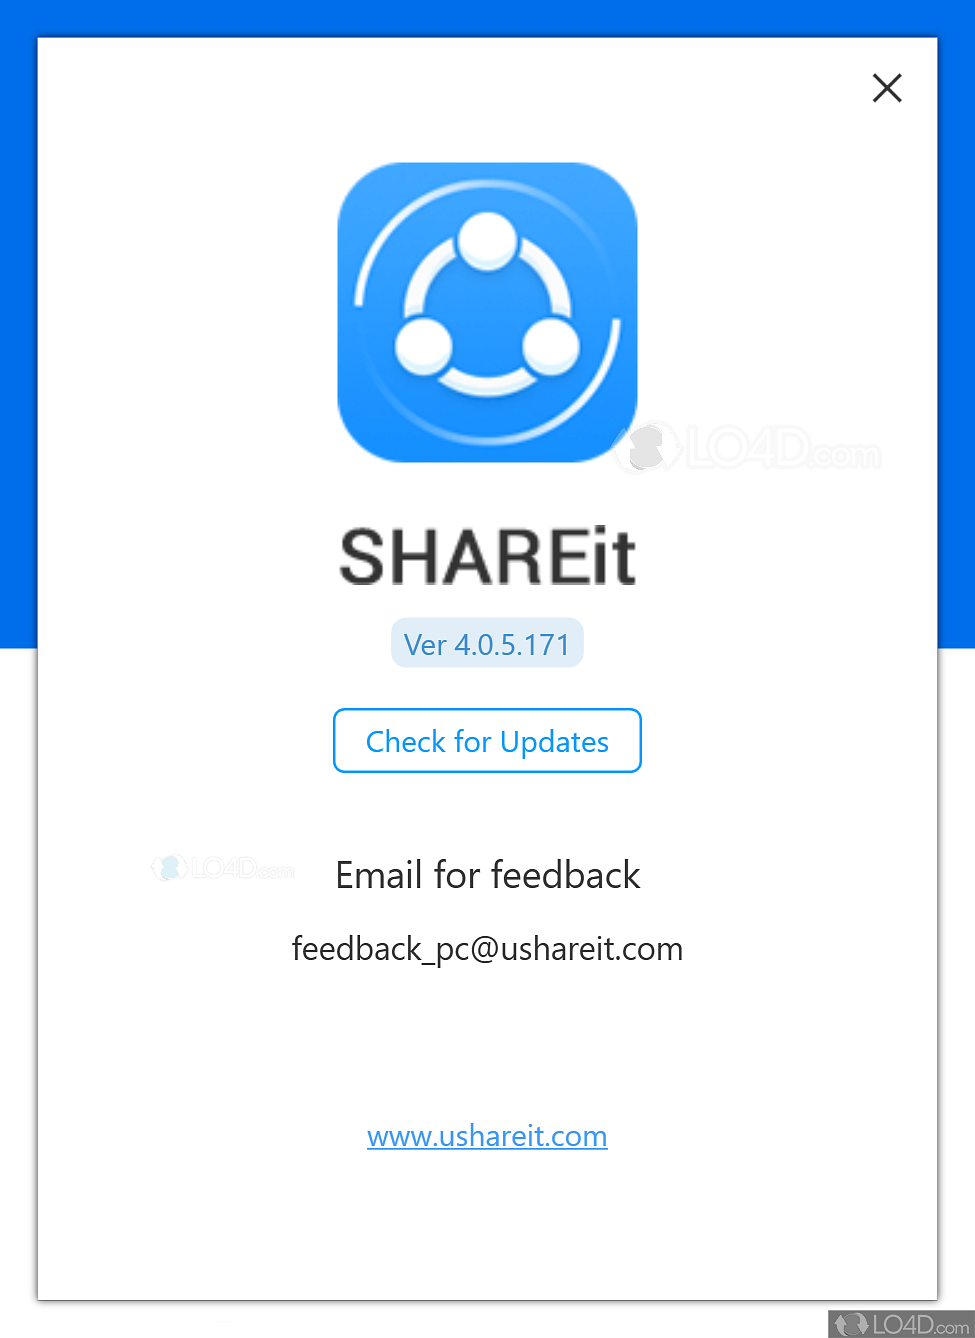 shareit download app